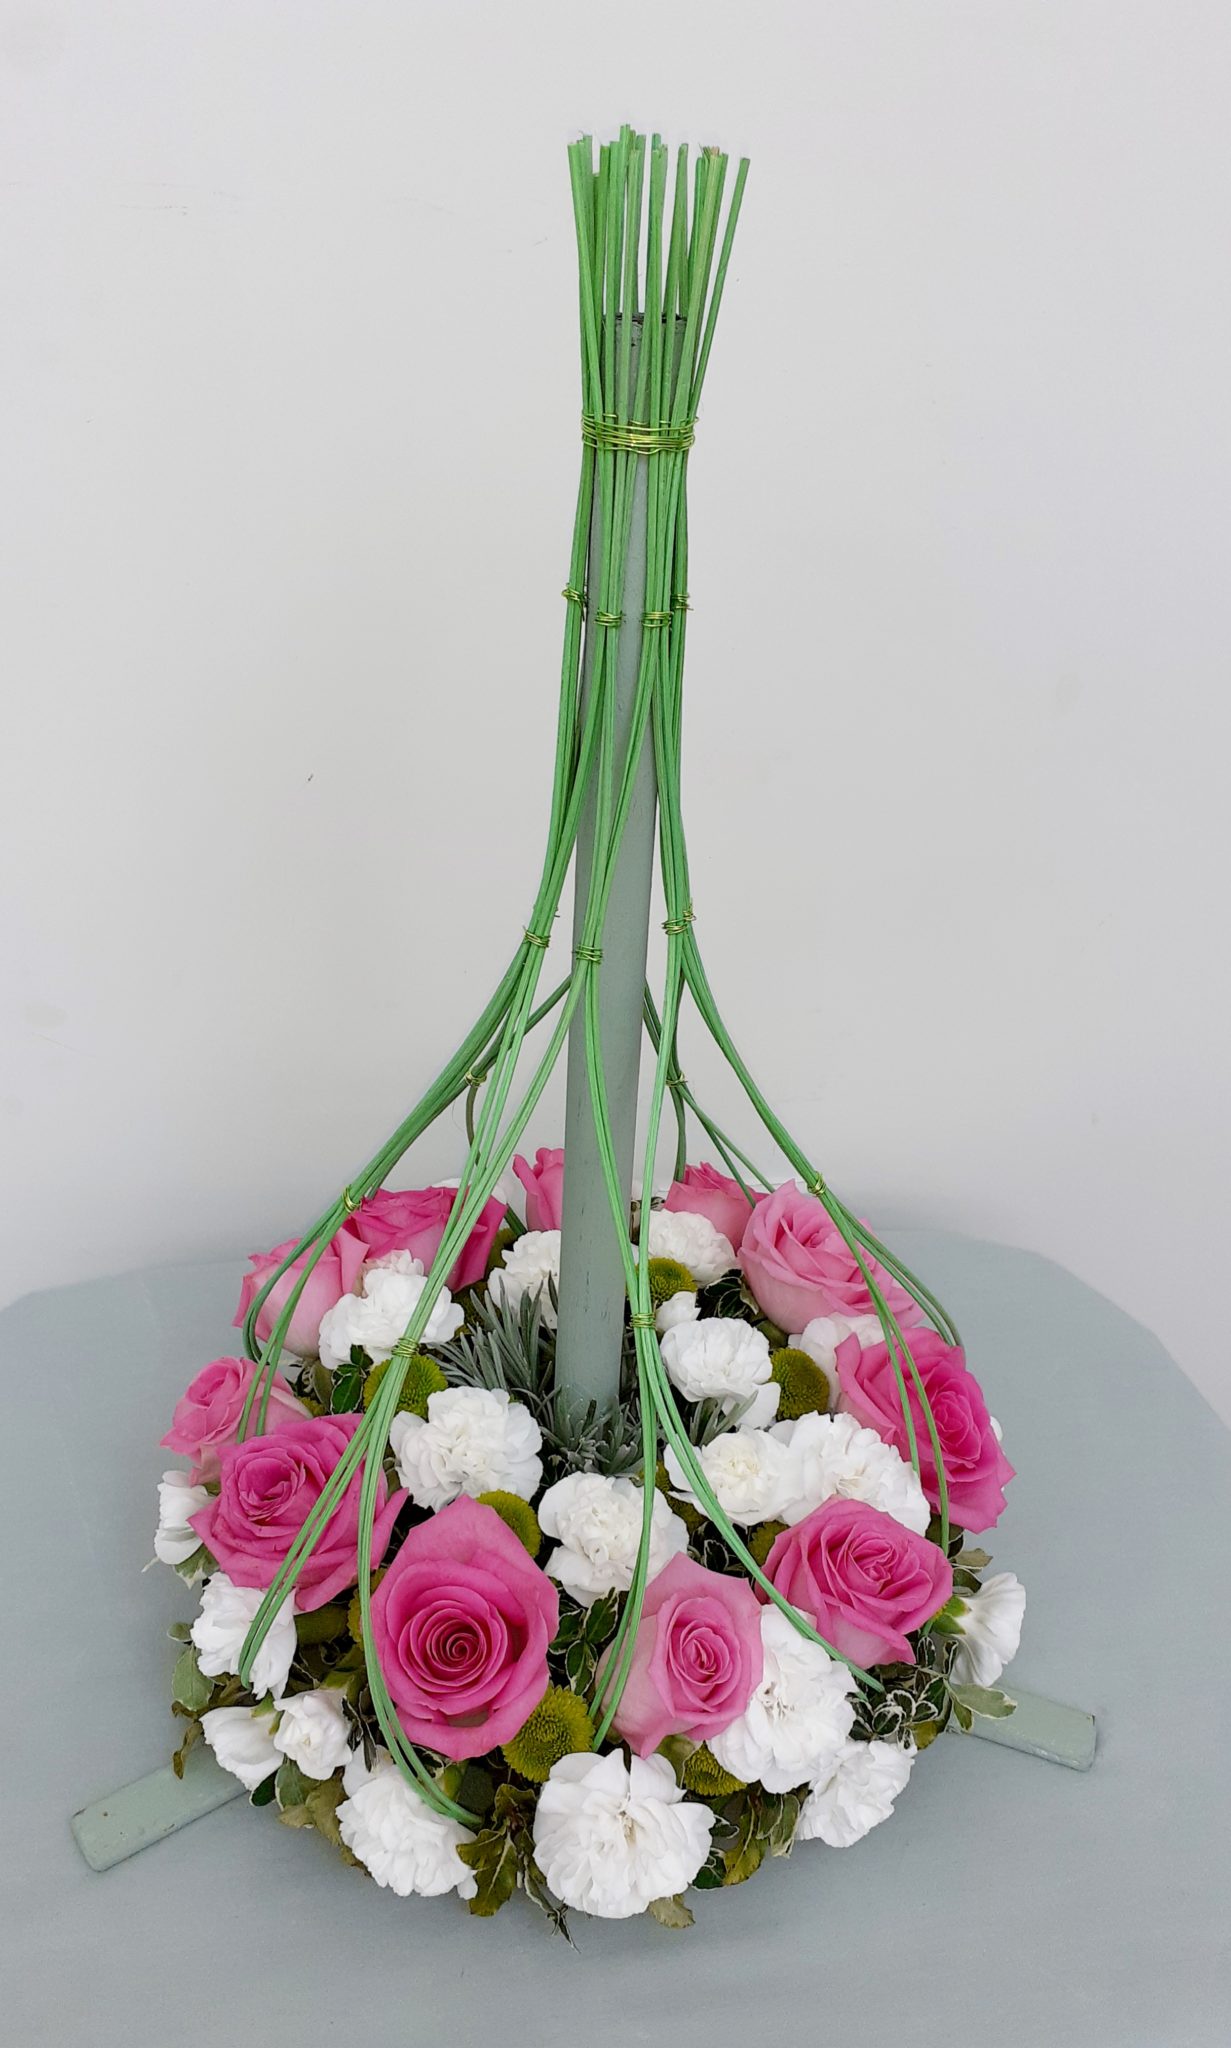 Sandy Milne - Sturminster Newton Floral group